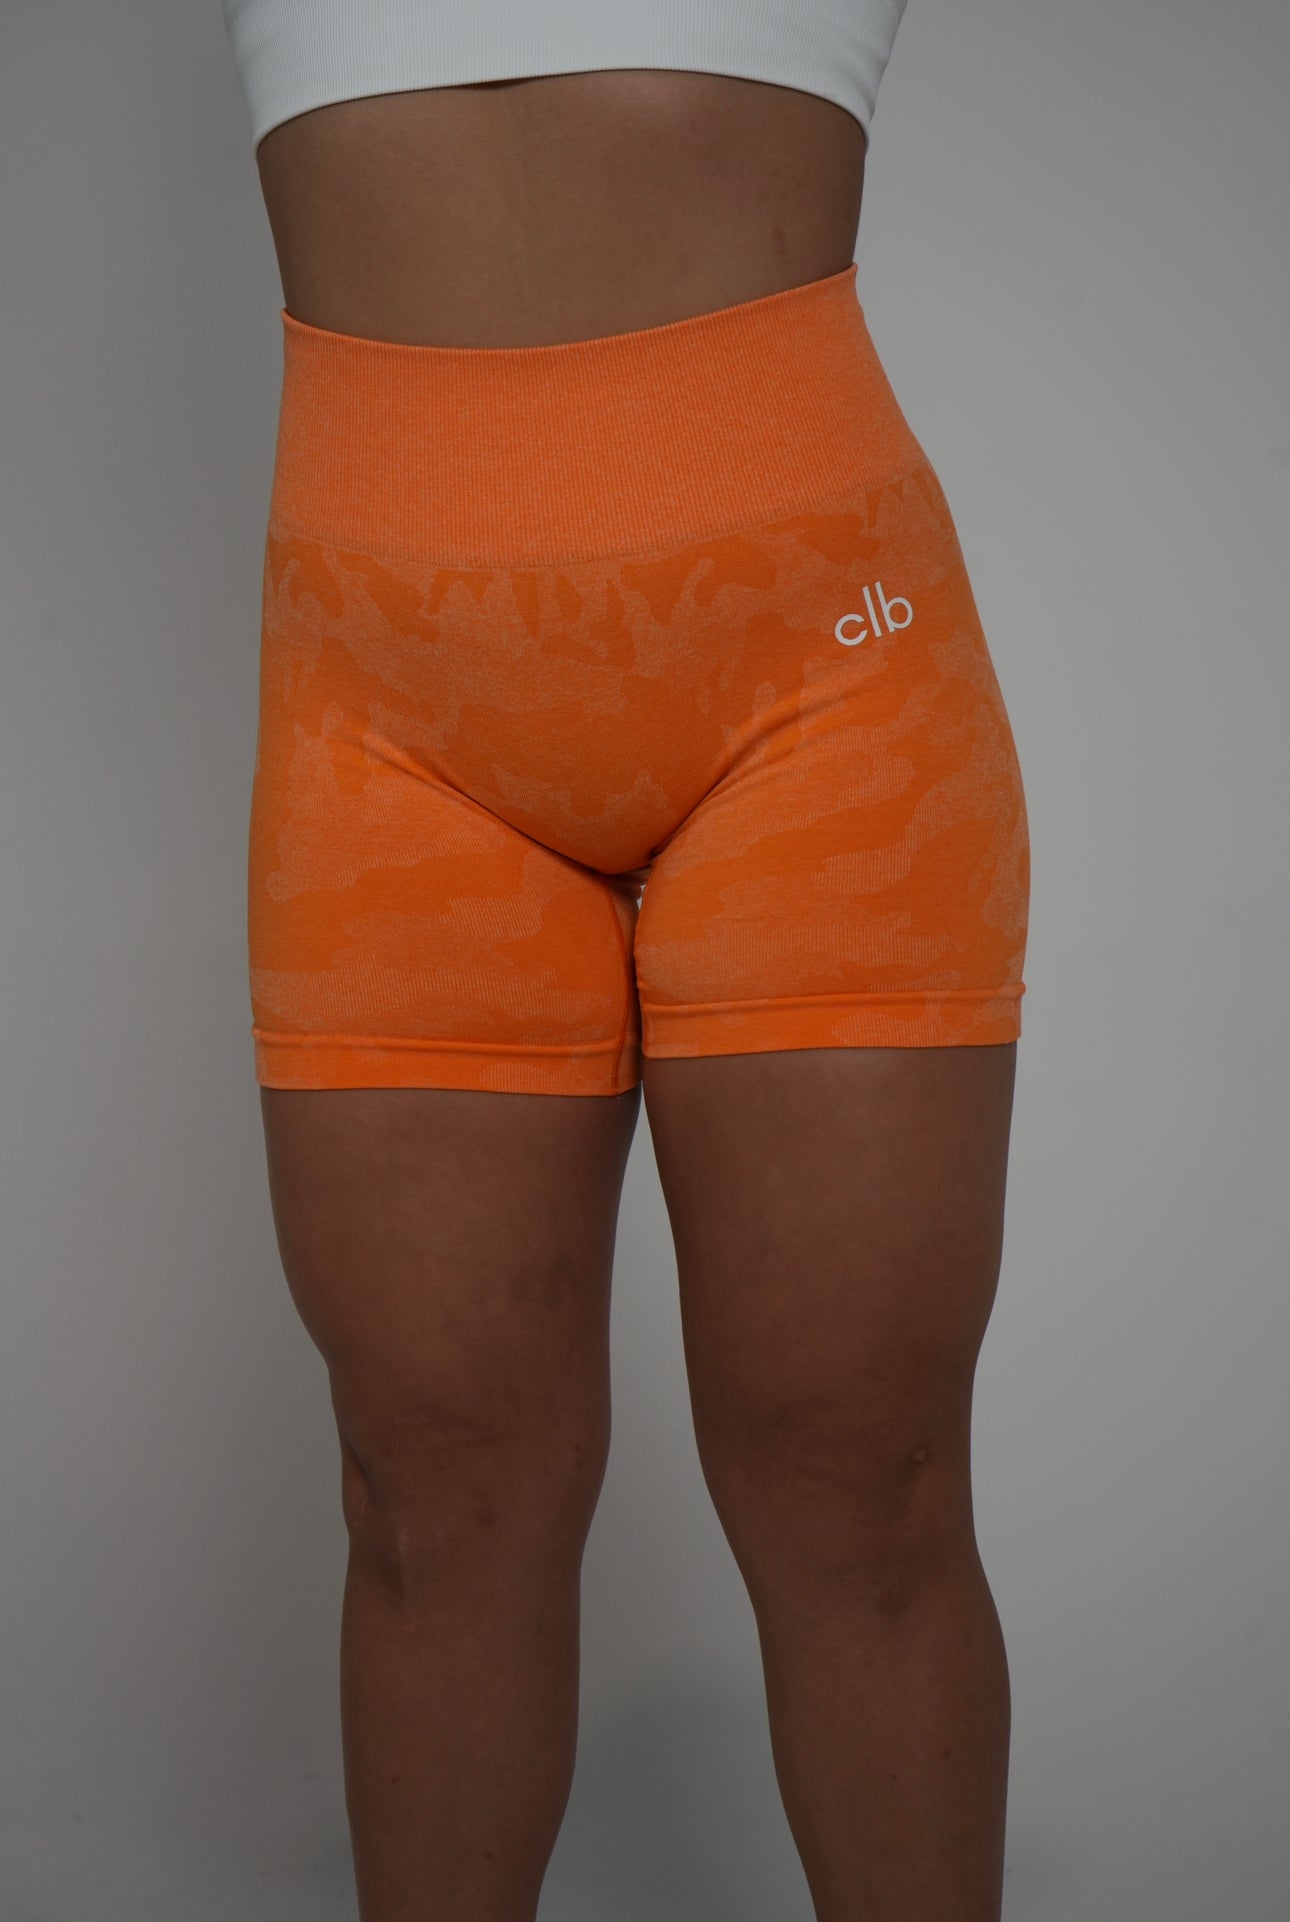 CLB Orange Camo Shorts